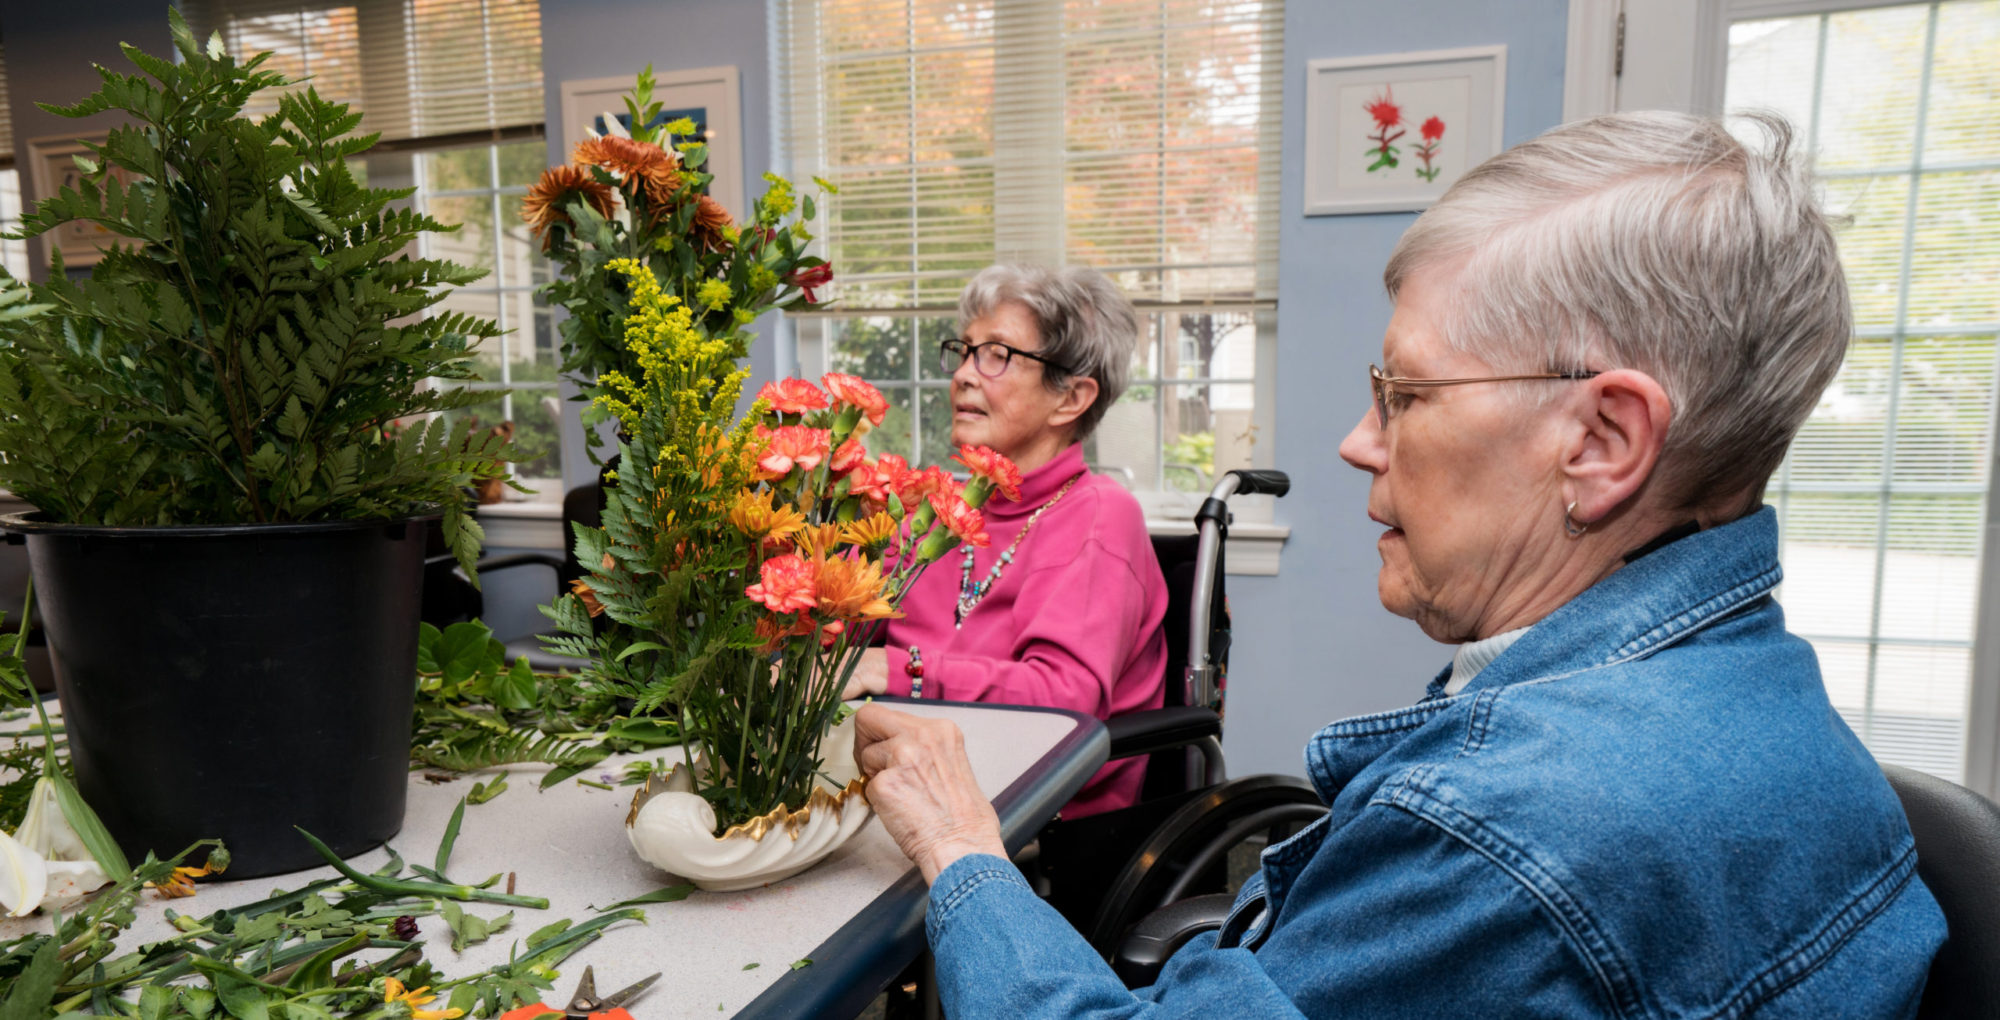 Residents Arrange Flowers with Volunteers